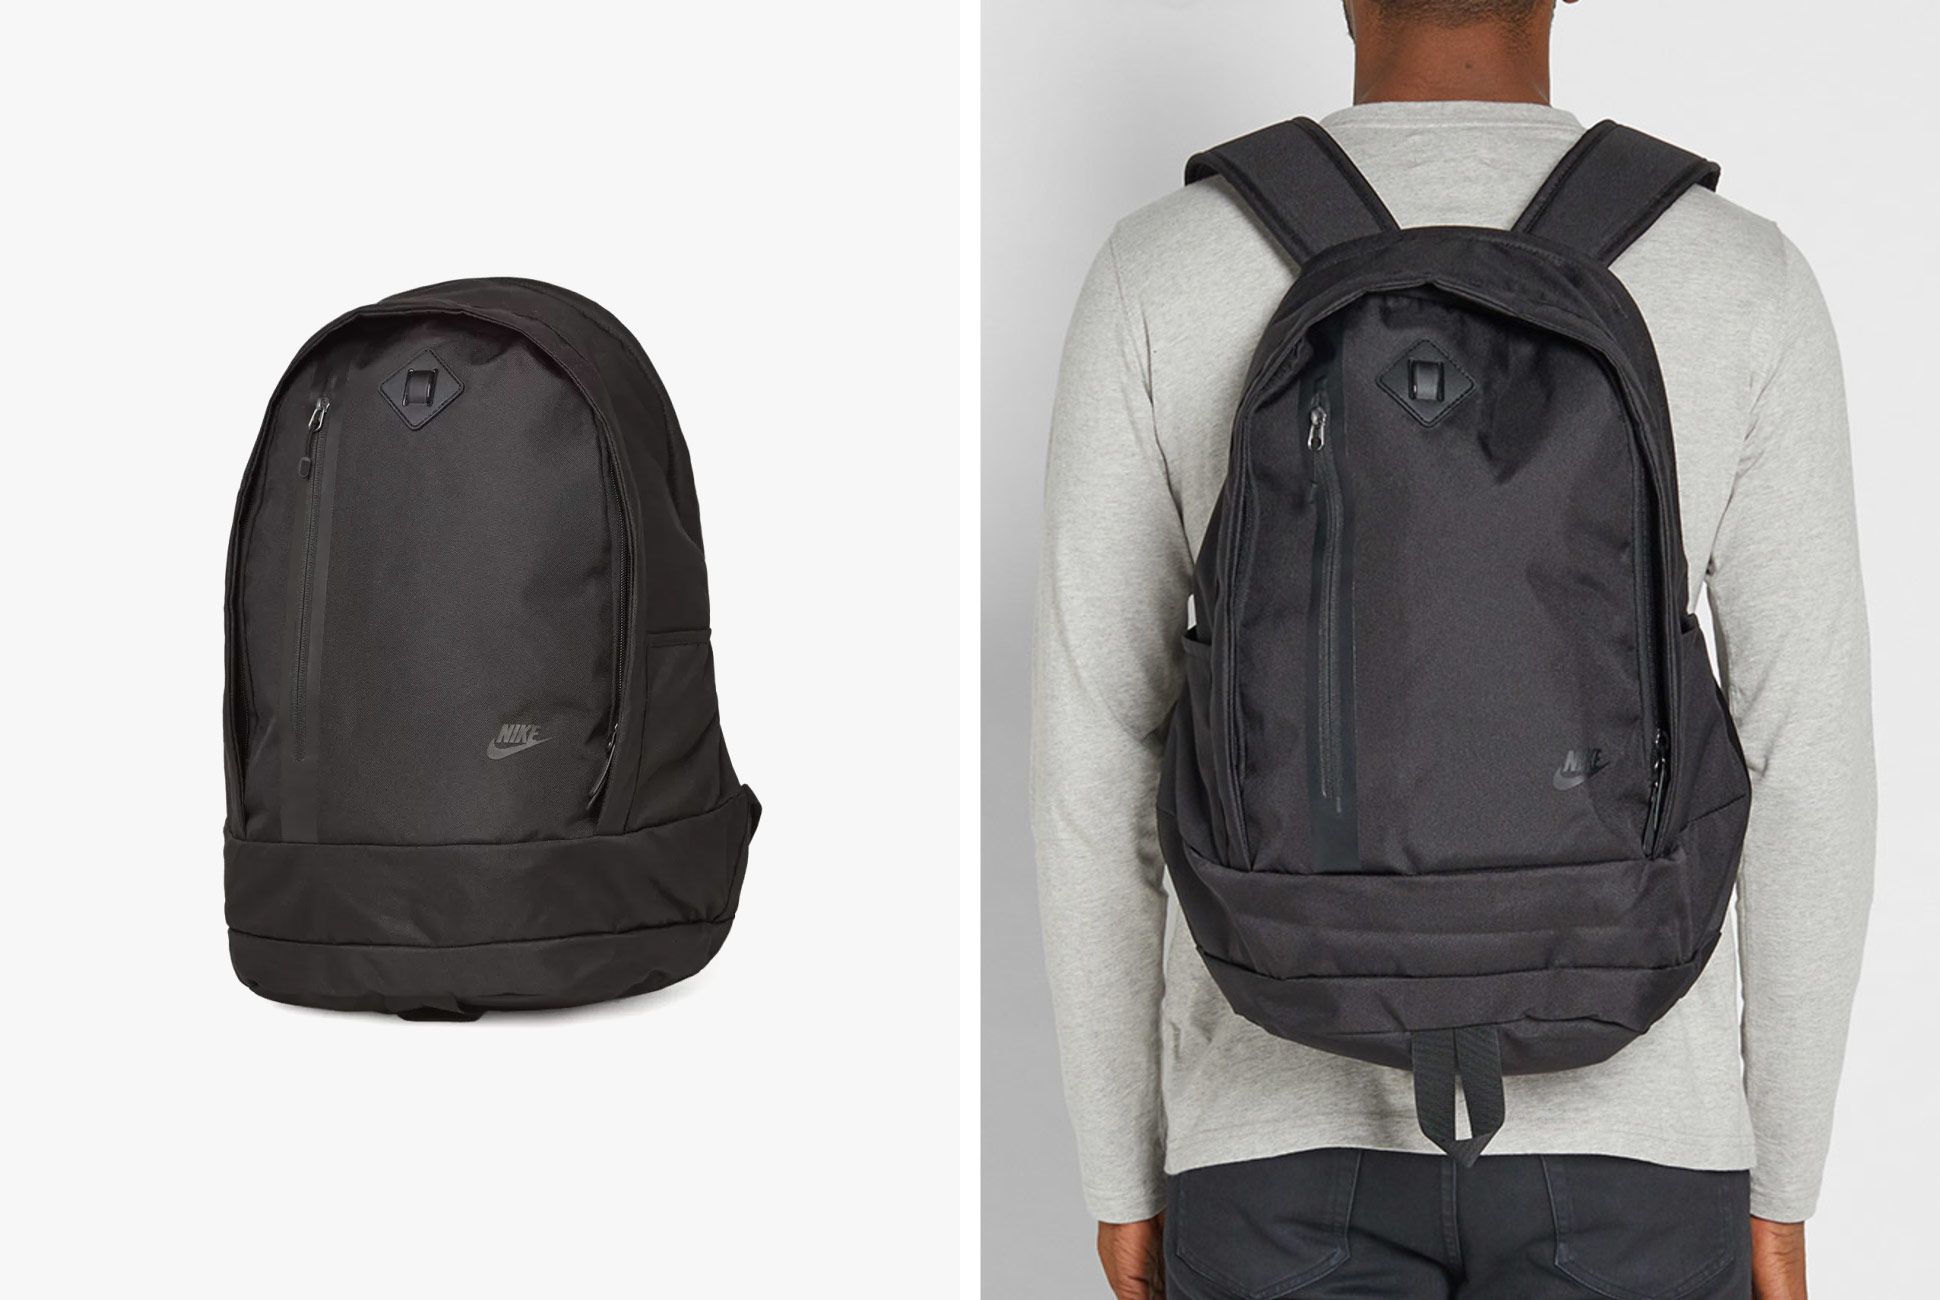 Get This Understated Black Backpack for Under